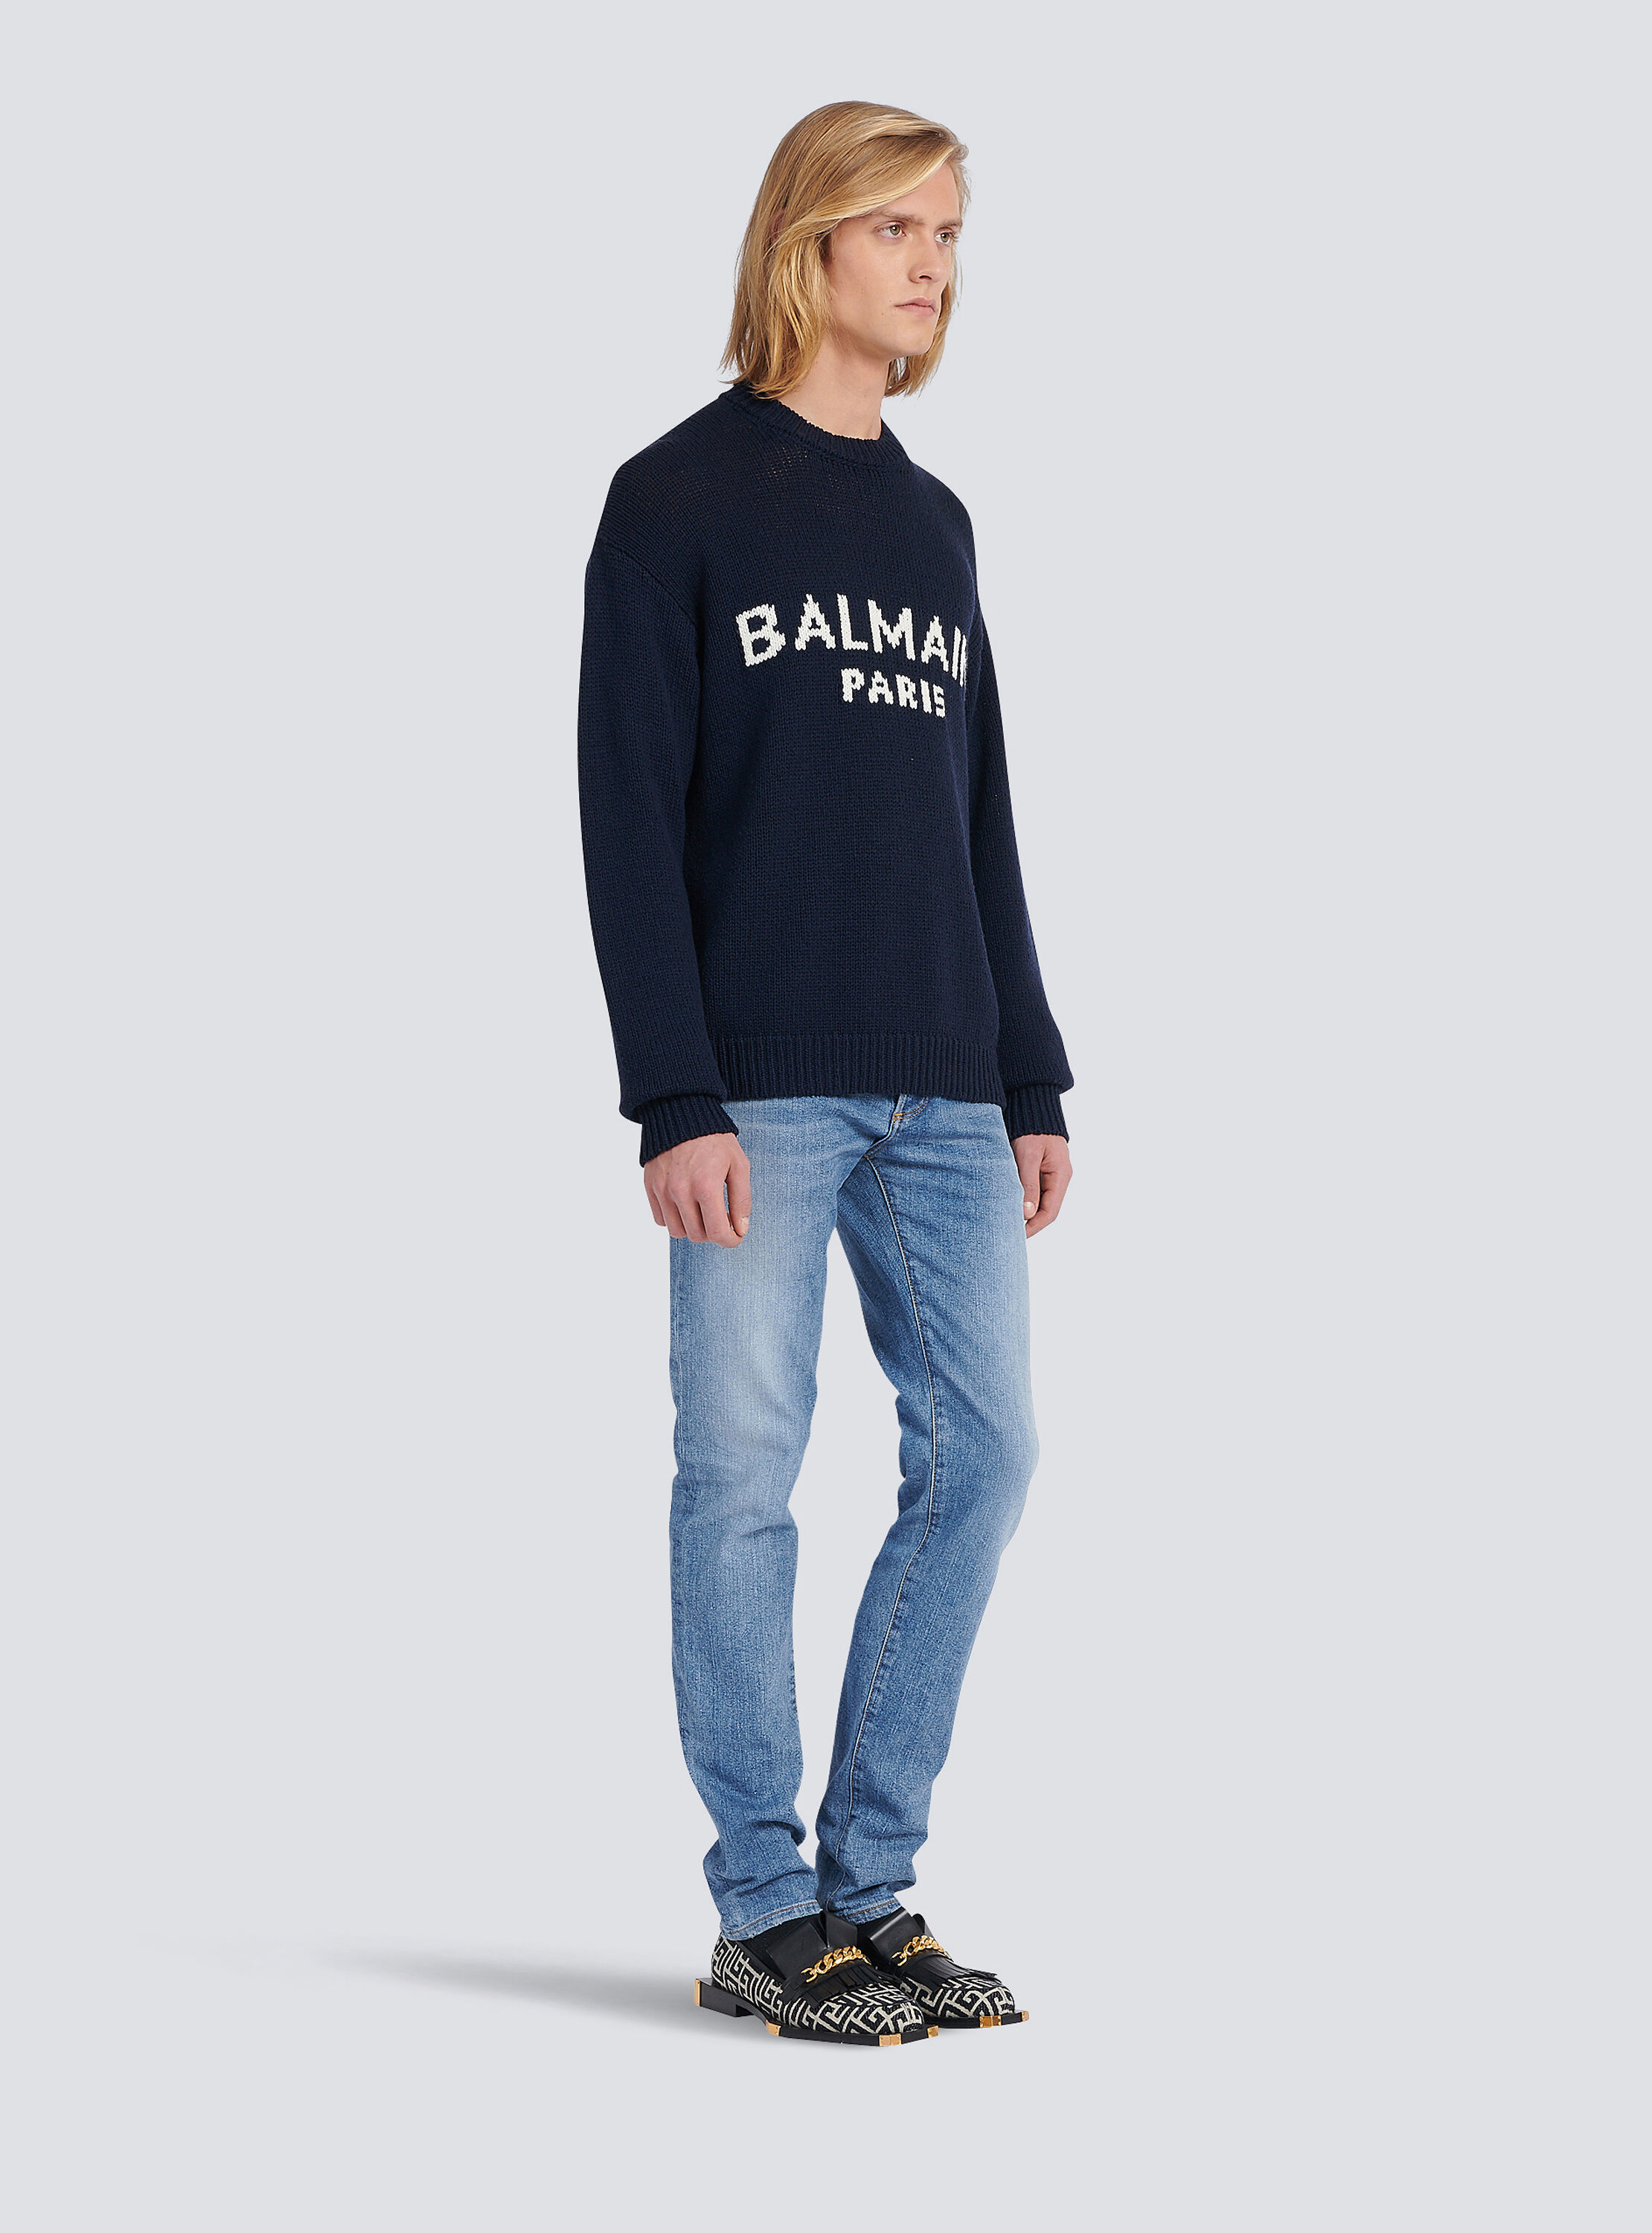 Designer Knitwear For Men | BALMAIN